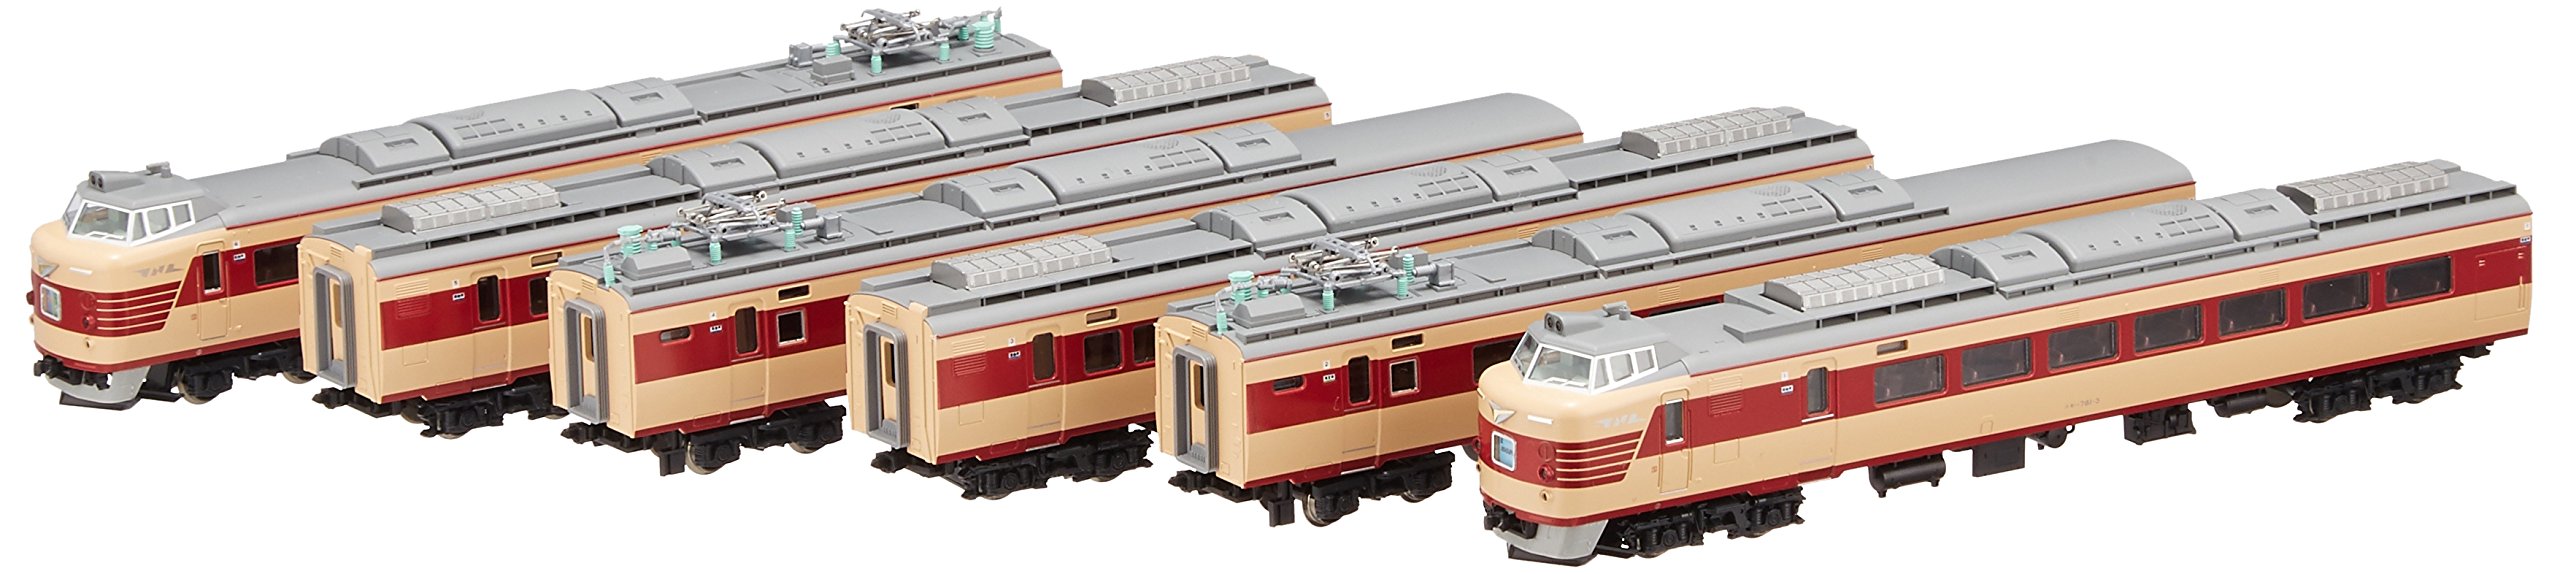 Kato N Gauge 781 Series 6-Car Set Model Train 10-1327